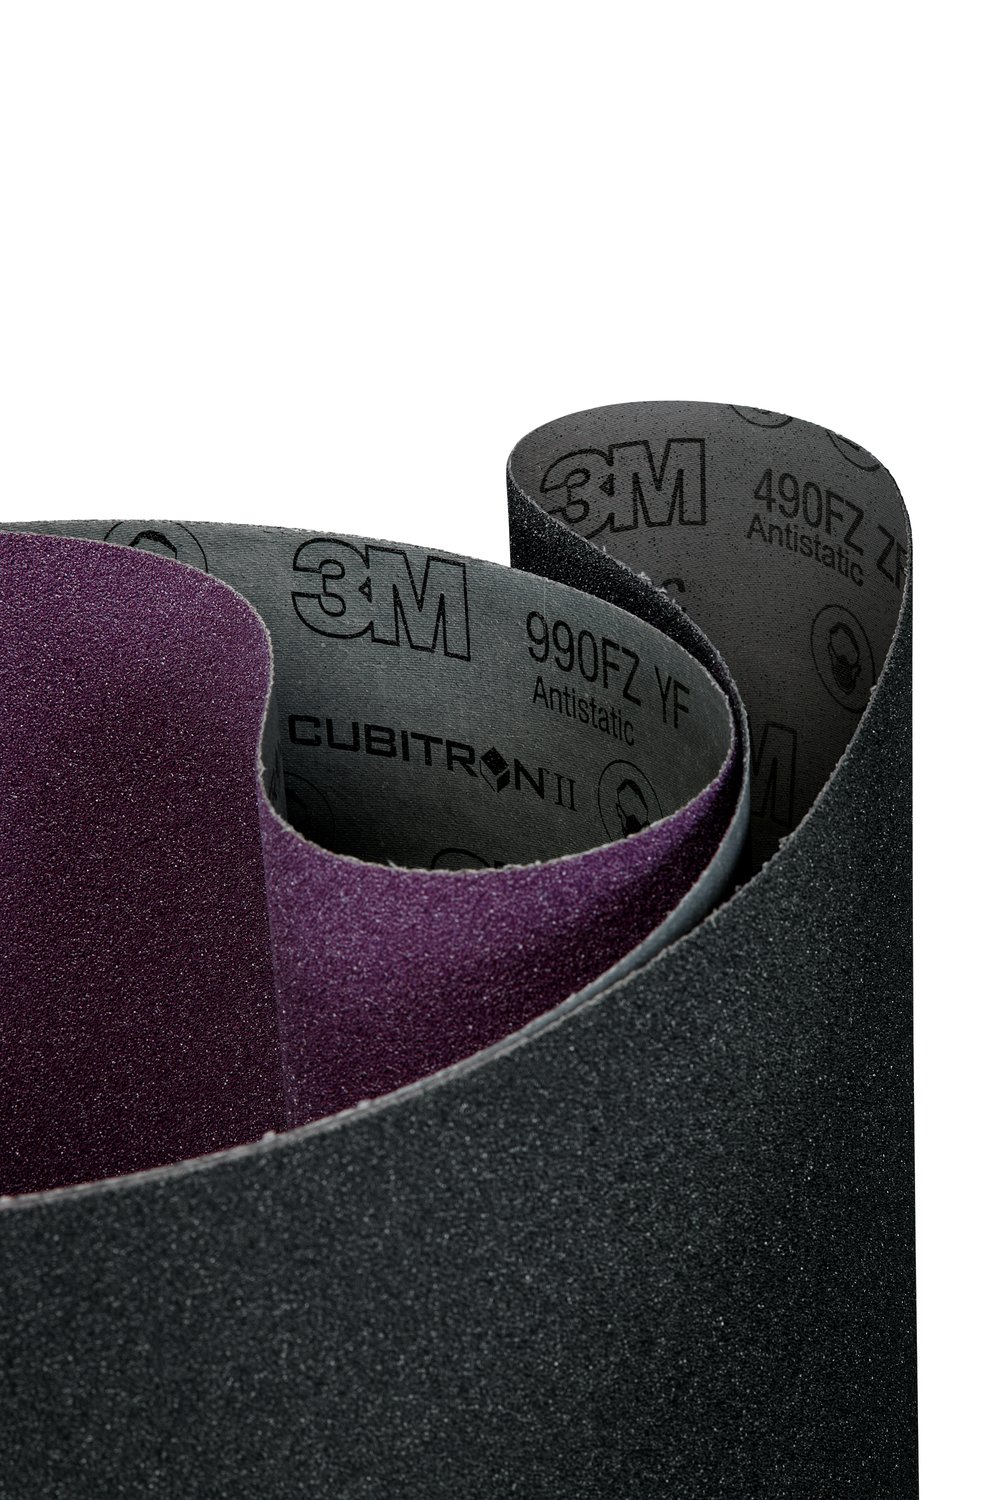 7100224120 - 3M SiC Cloth Belt 490FZ, P50 ZF-weight, 52 in x 103 in, Sine-lok
Precision Roll Grinding, Single-flex, 2 ea/Case